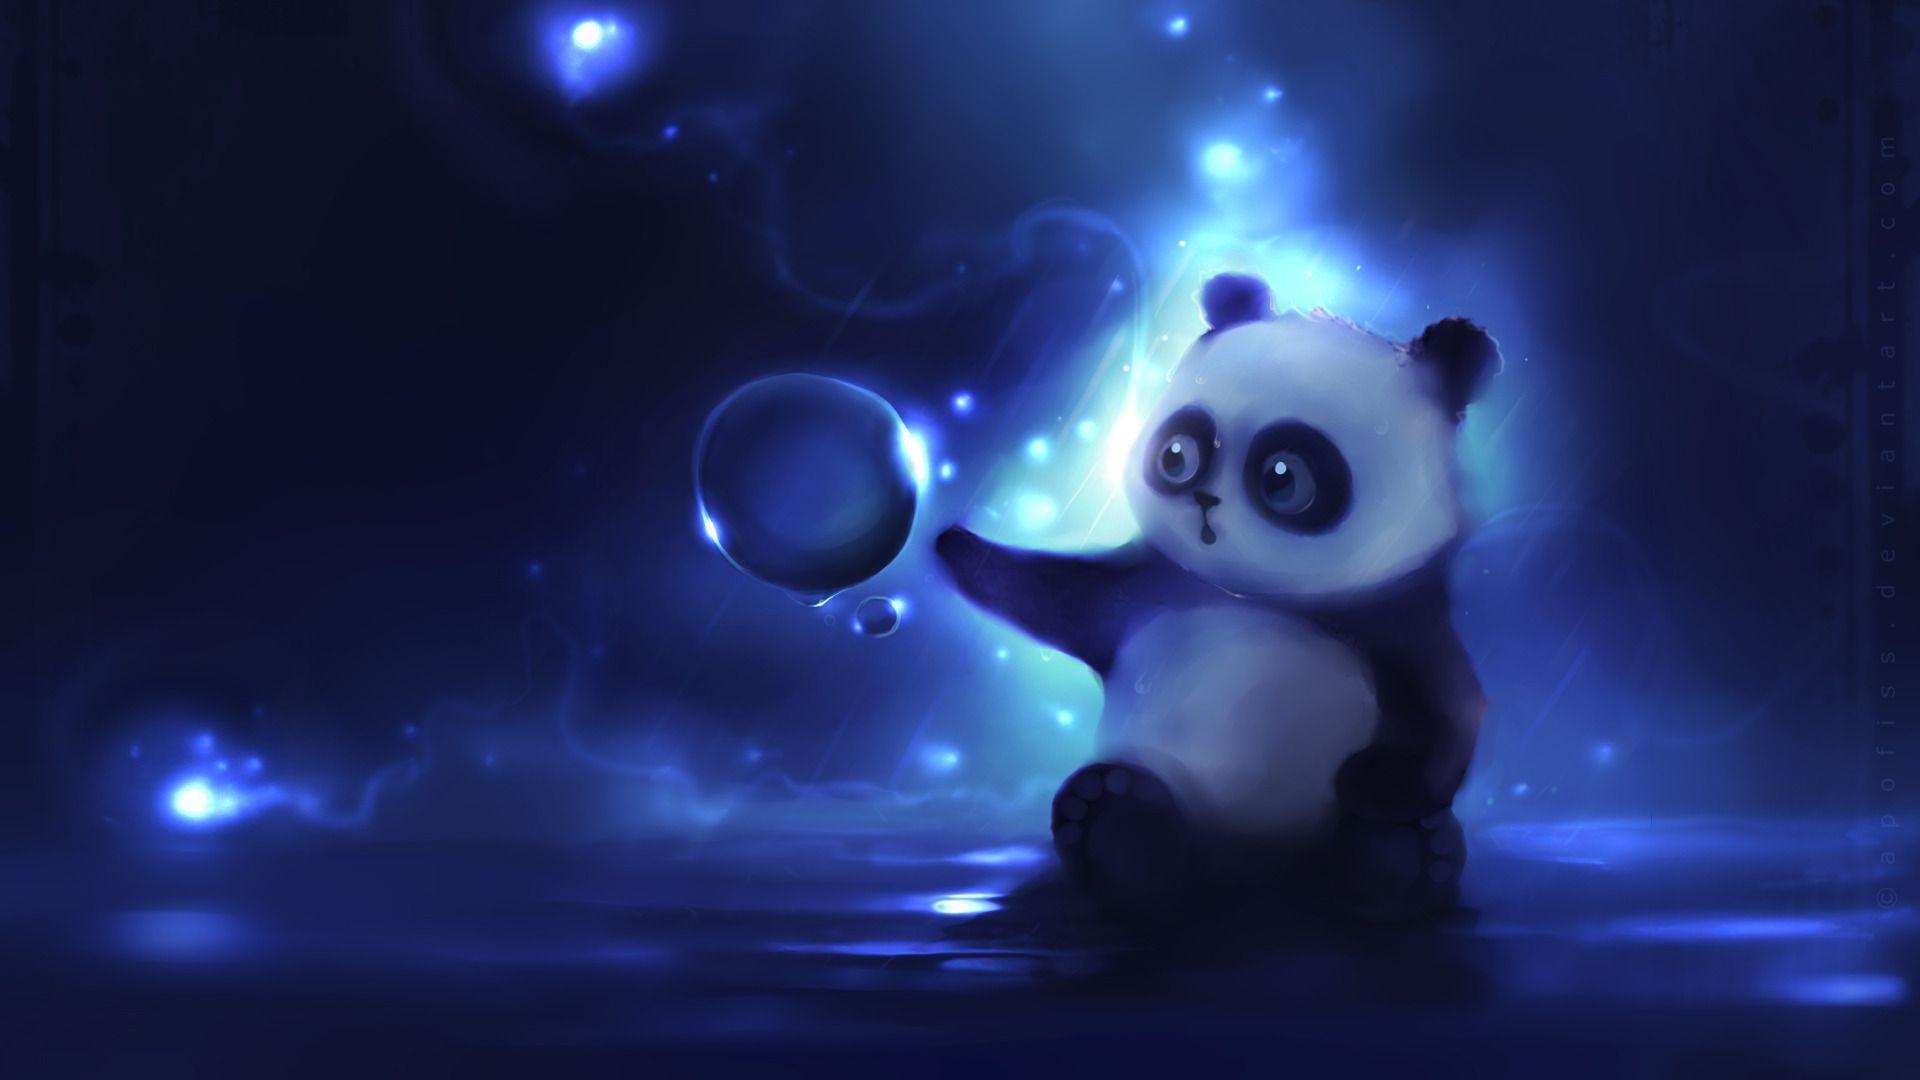 Wallpaper For > Panda Bear Cartoon Wallpaper